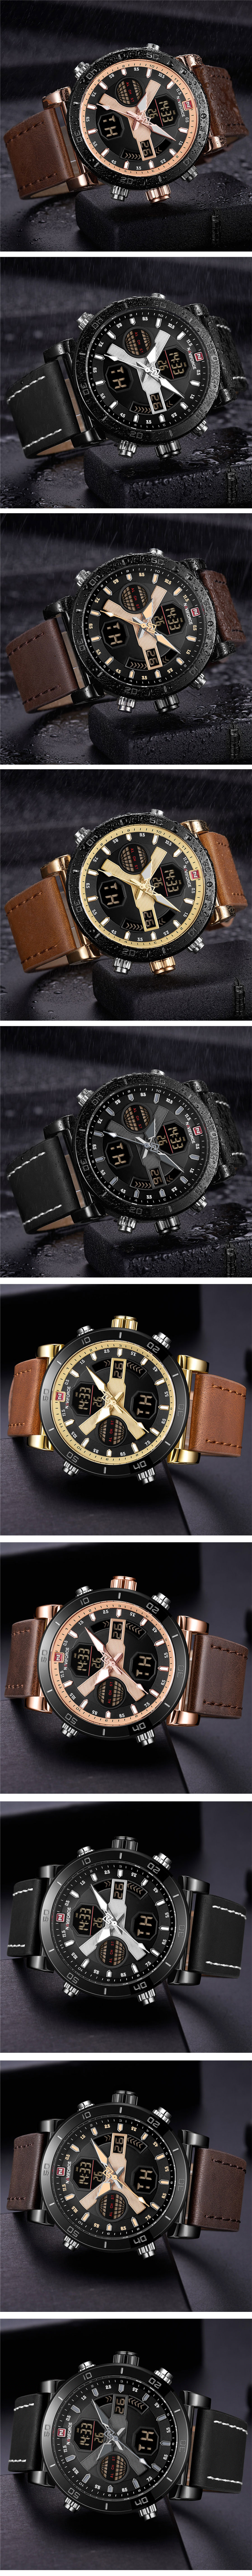 NAVIFORCE-9132-Dual-Display-Digital-Watch-Men-Luminous-Calendar-Watch-Leather-Strap-Watch-1314501